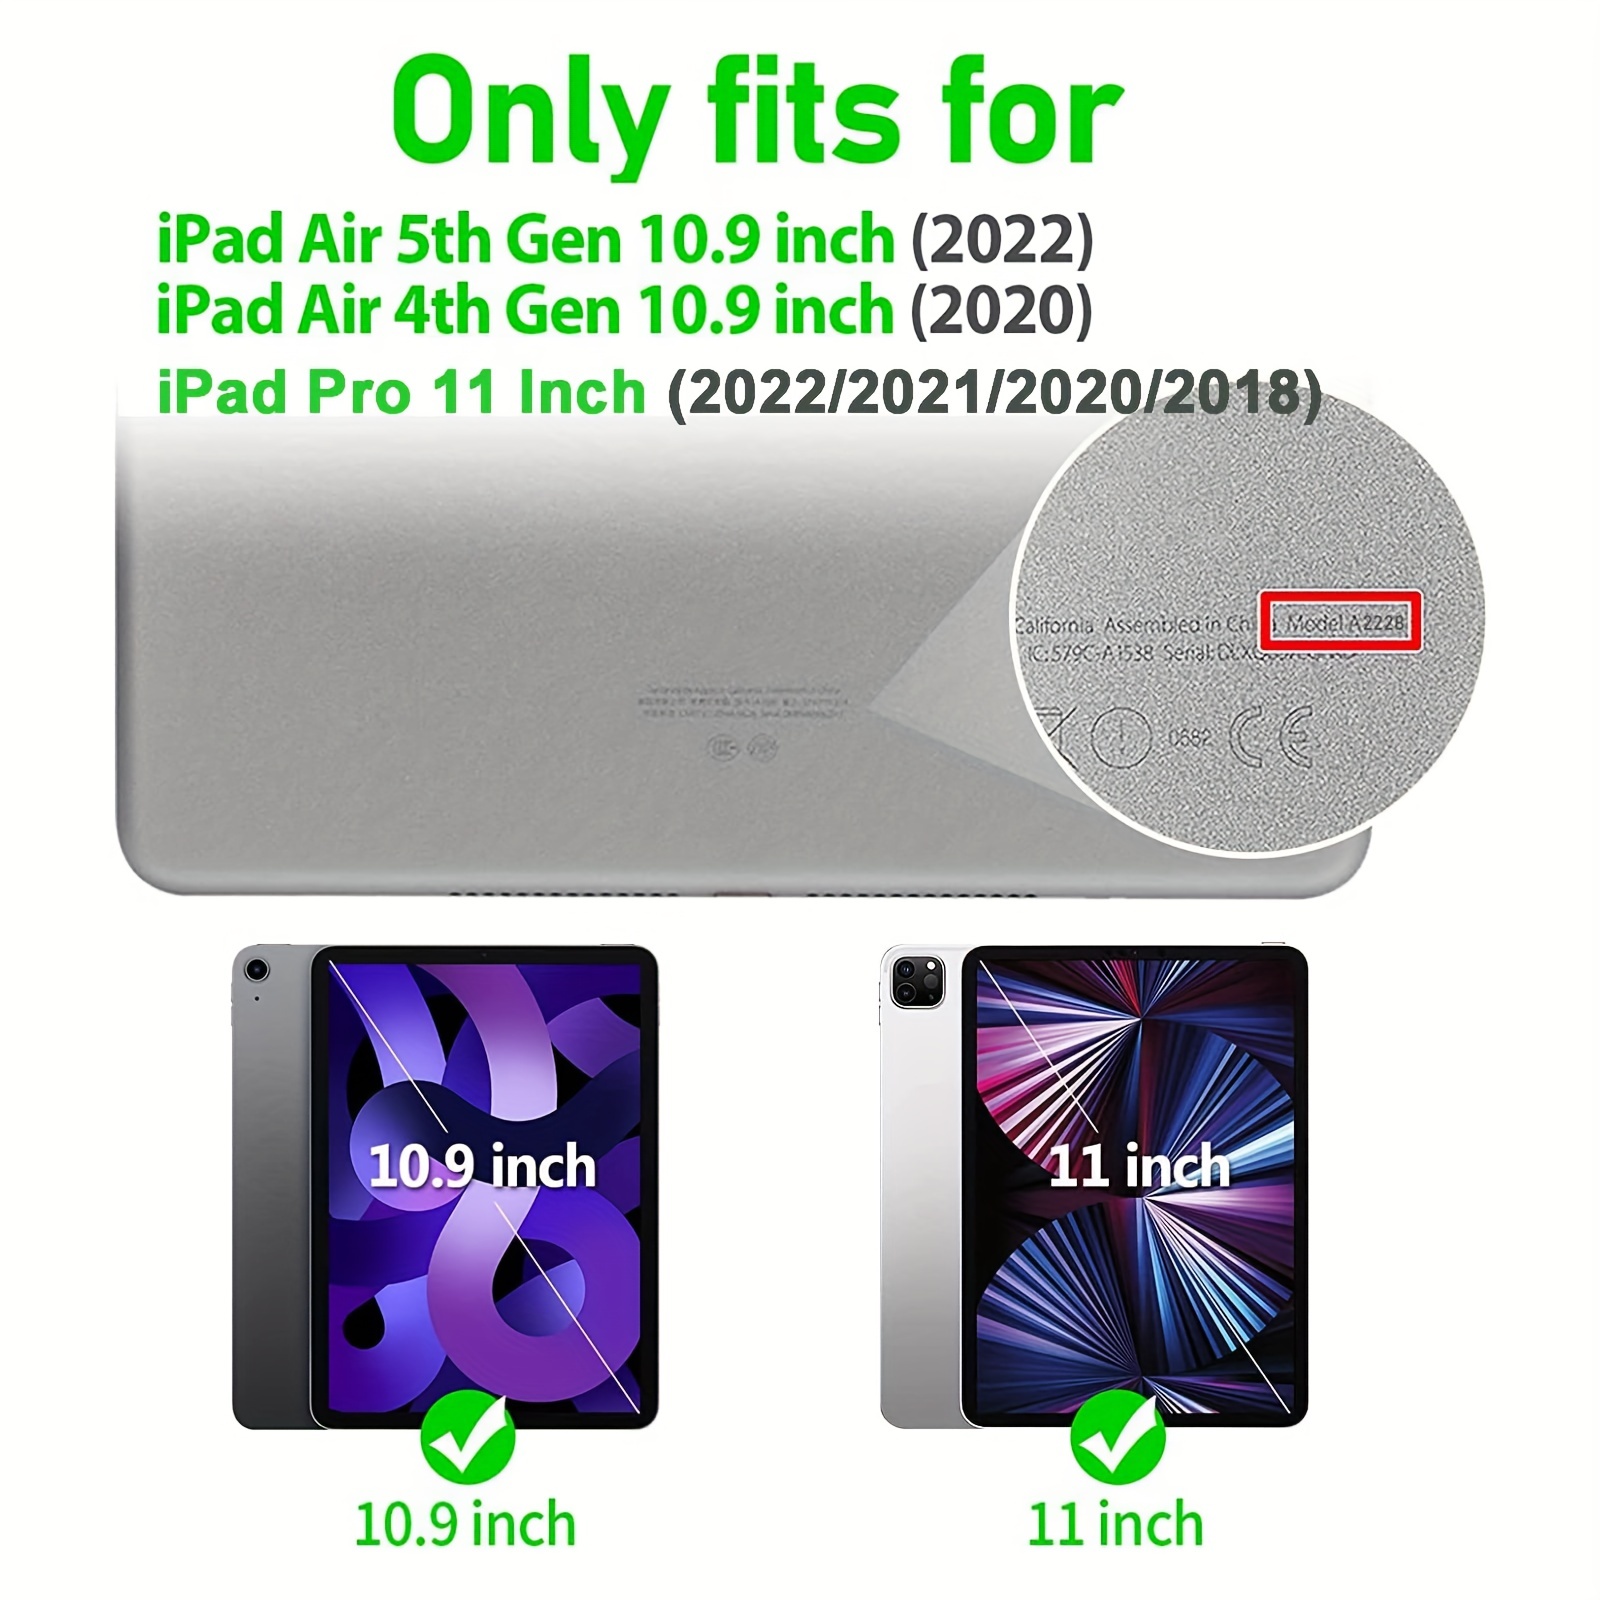 iPad Pro 11 Inch (2022/2021/2020/2018) Hybrid Rugged Case